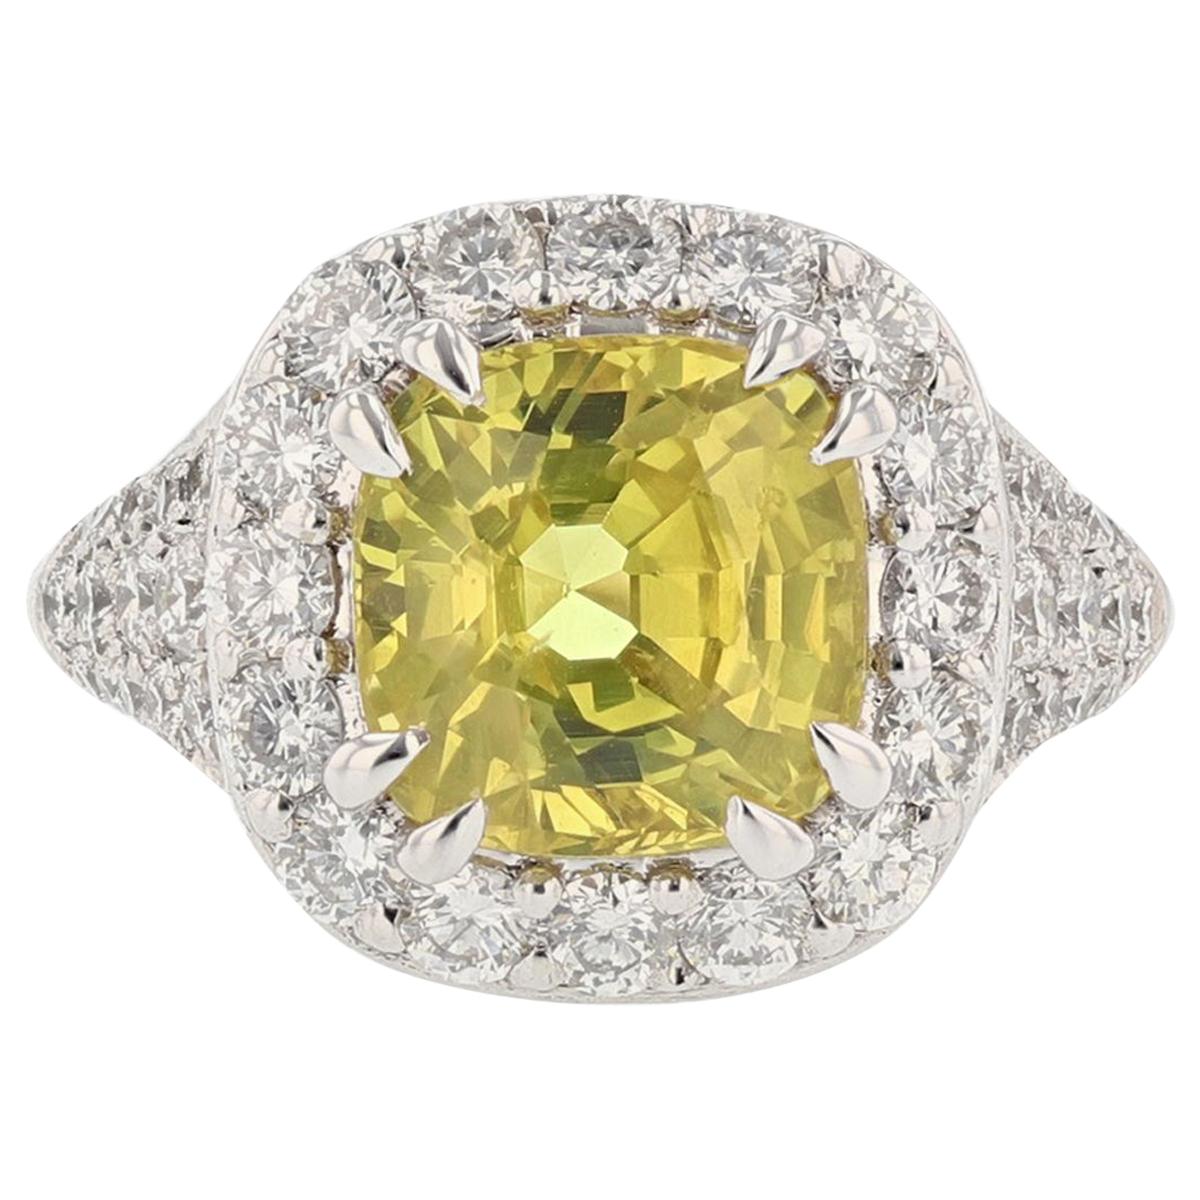 14 Karat White Gold 4.85 Carat Cushion Cut Yellow Sapphire Diamond Ring